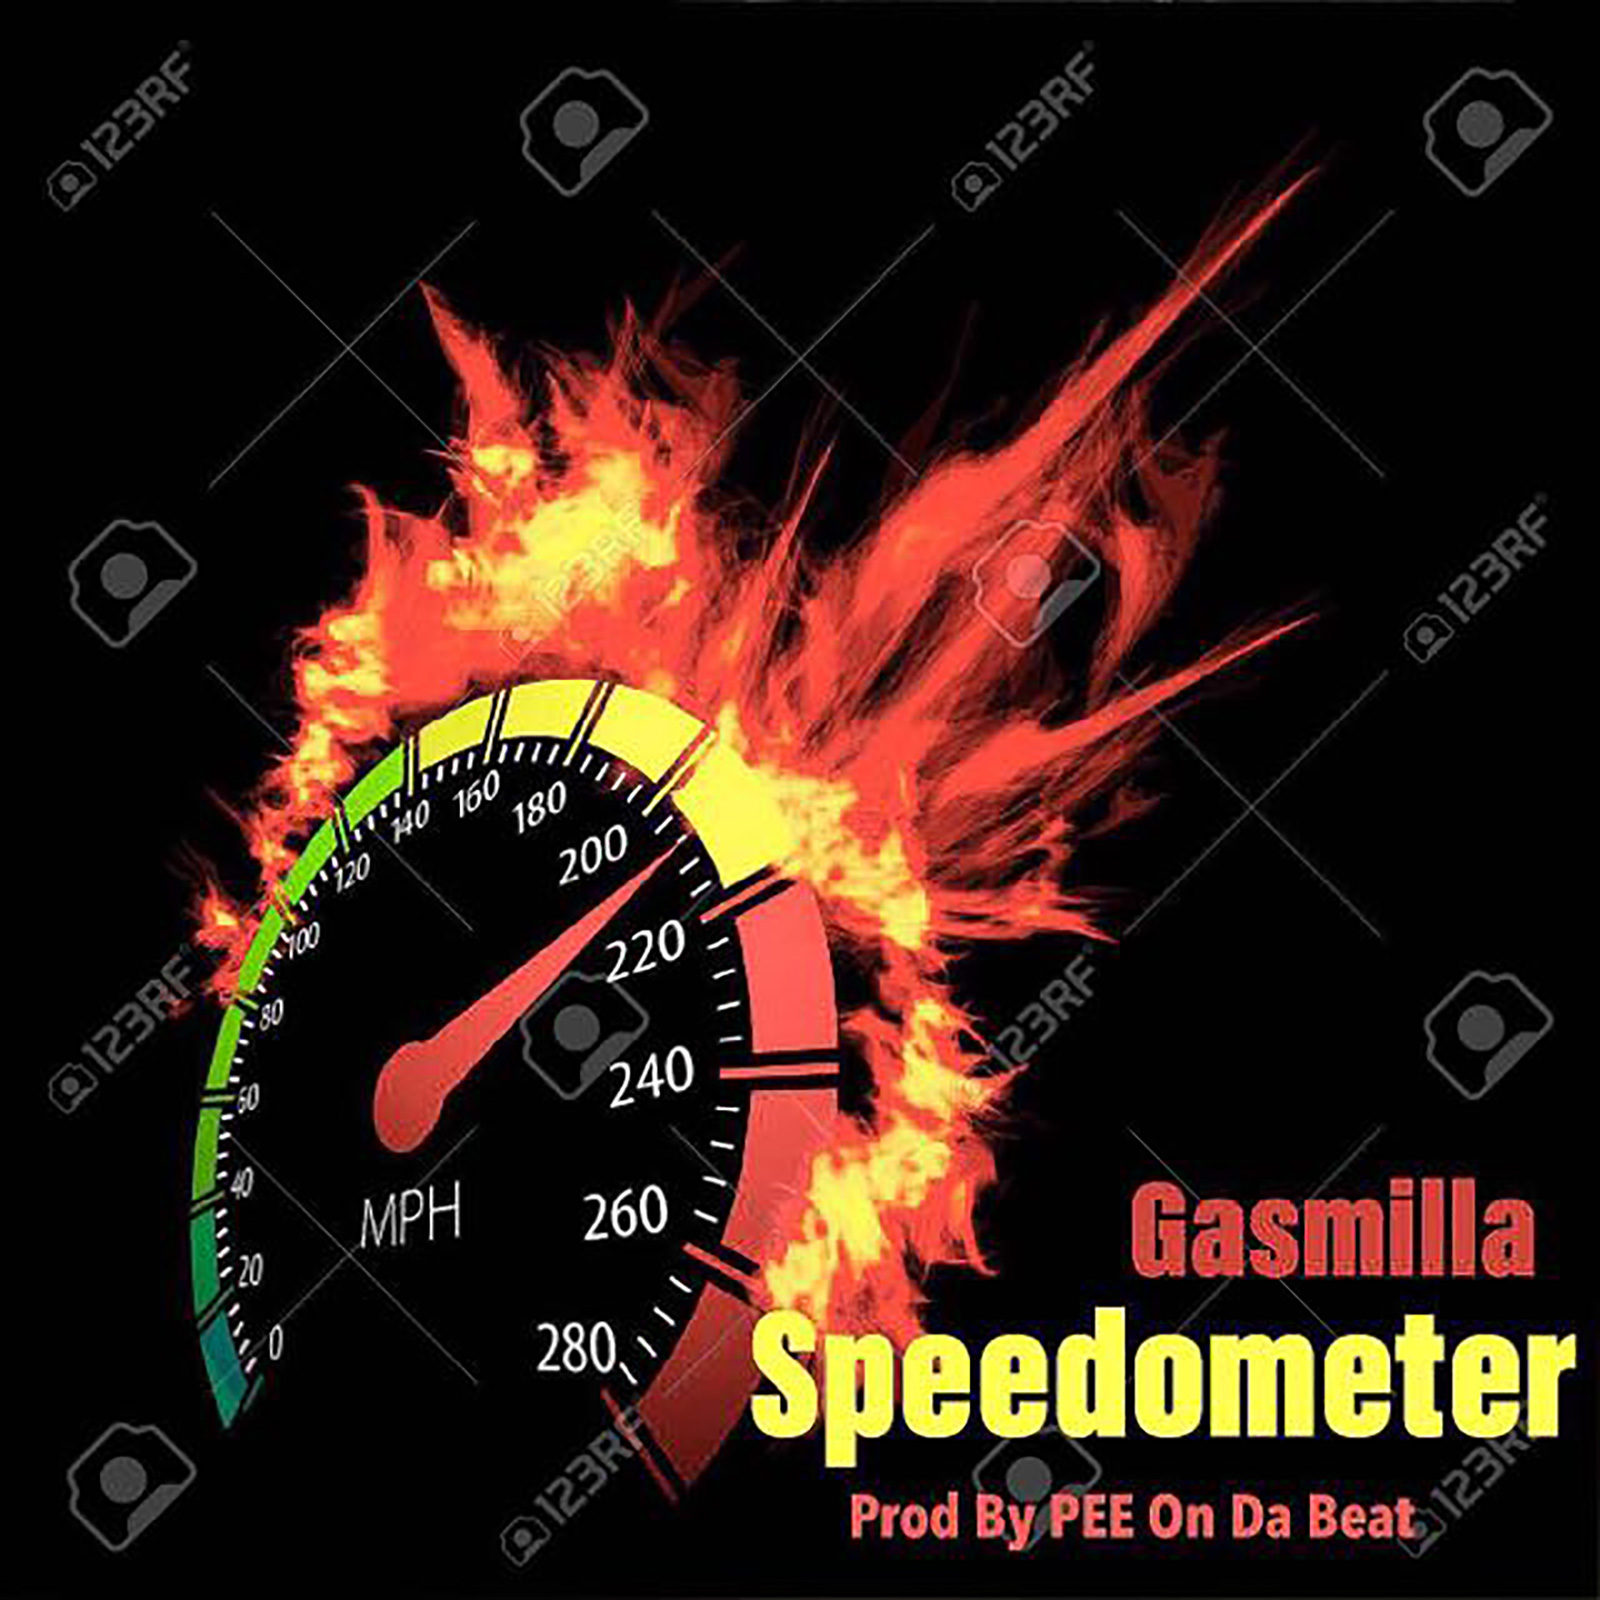 Speedometer by Gasmilla